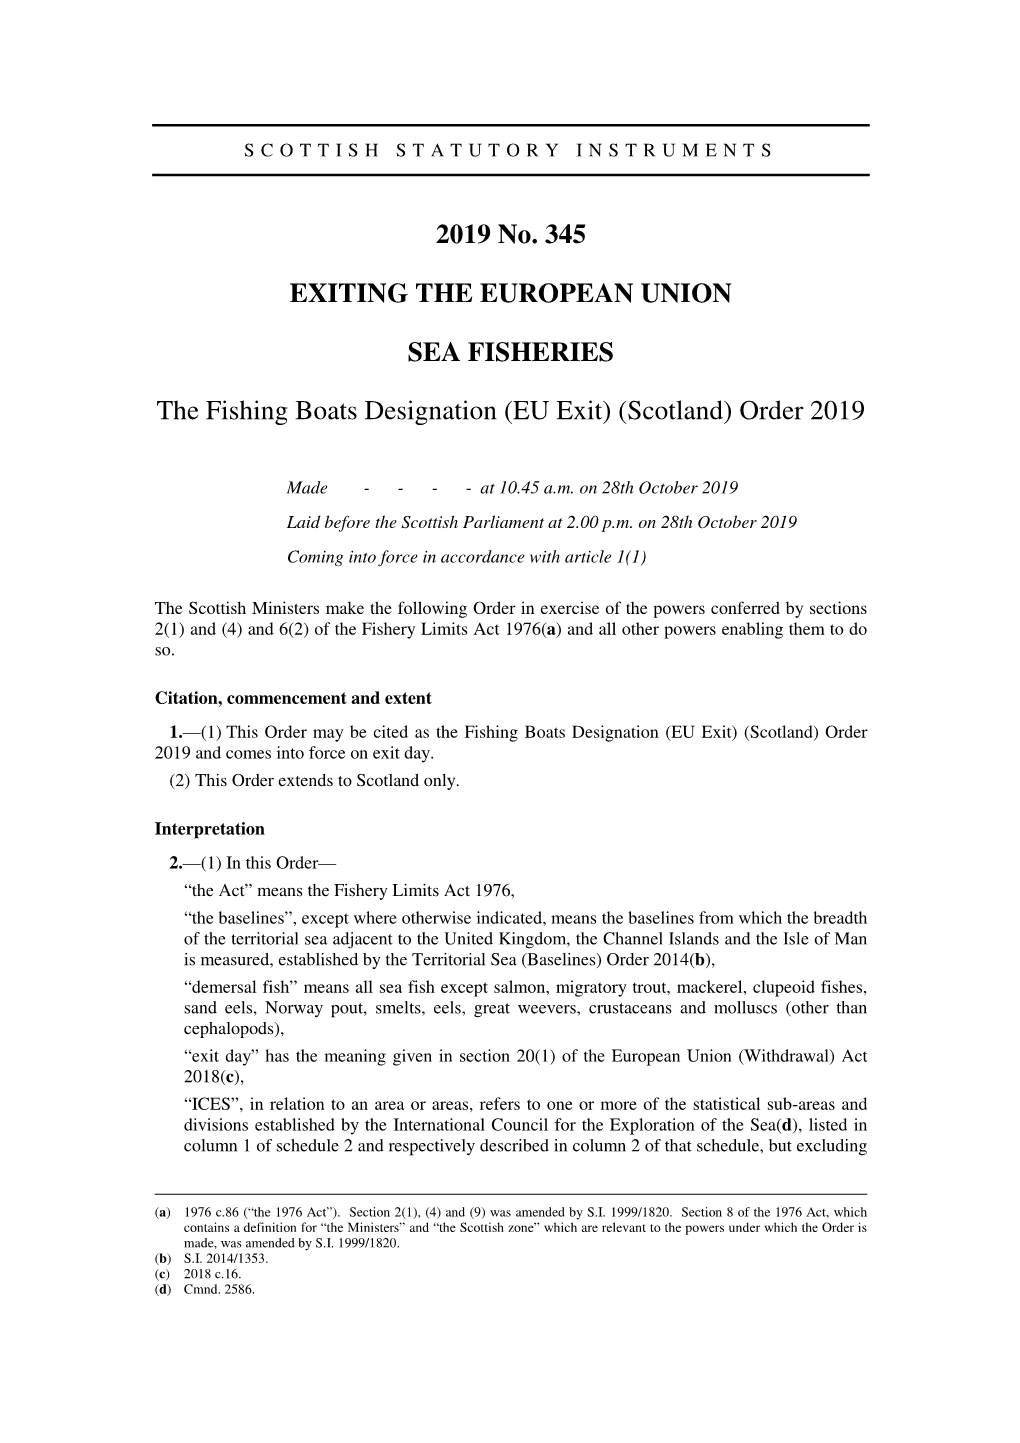 The Fishing Boats Designation (EU Exit) (Scotland) Order 2019